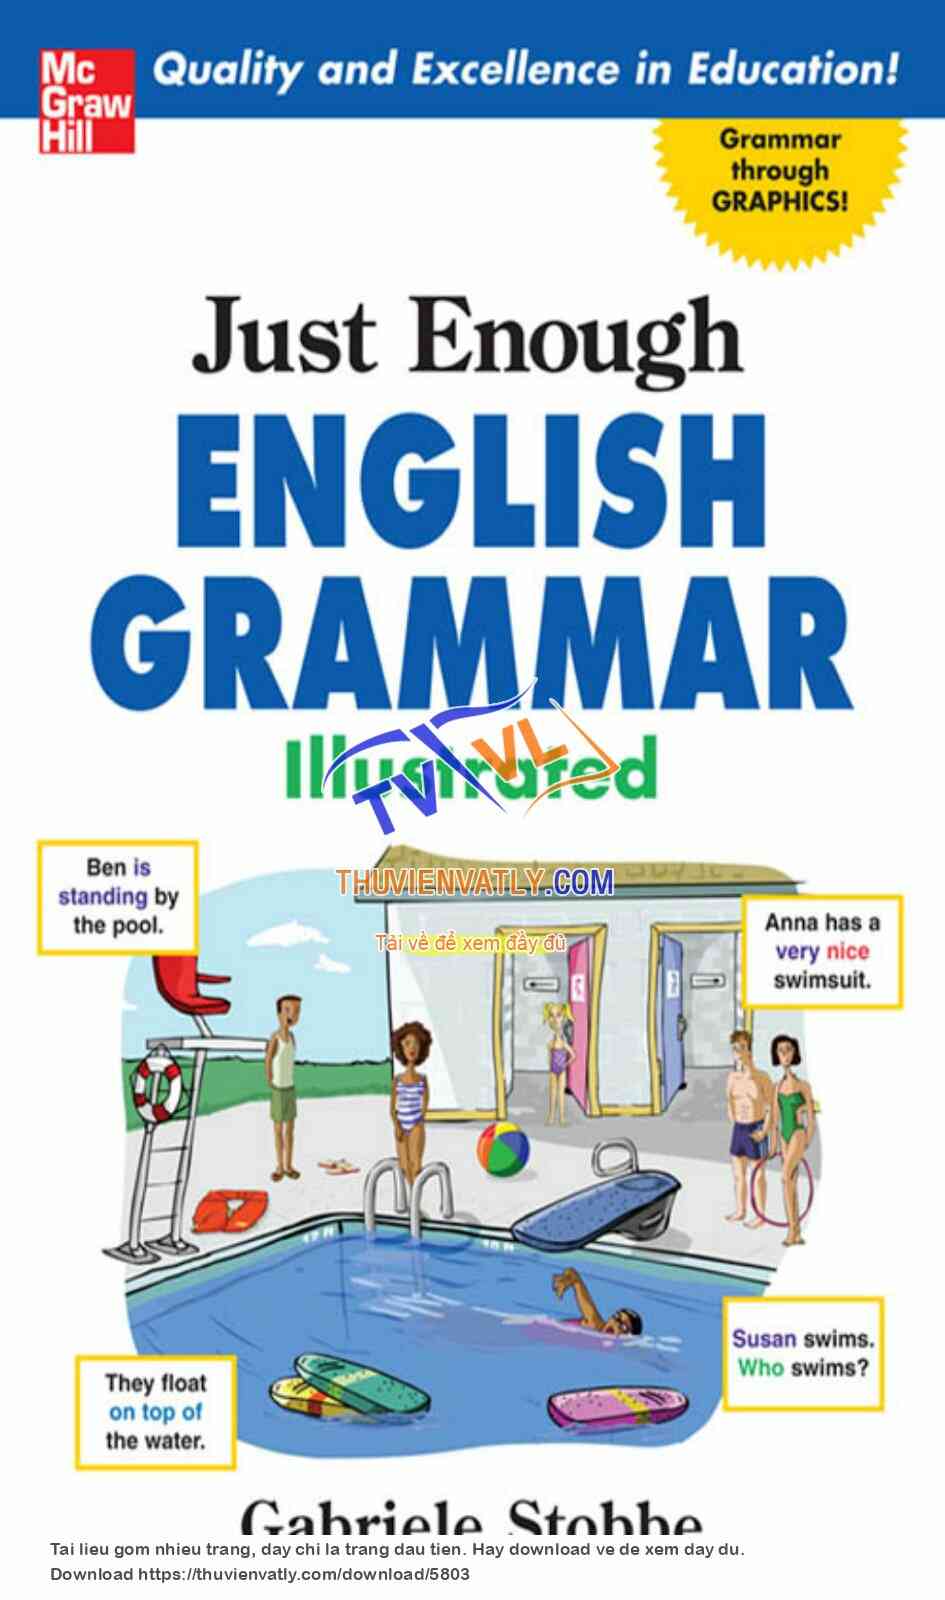 Just Enough ENGLISH GRAMMAR Illustrated